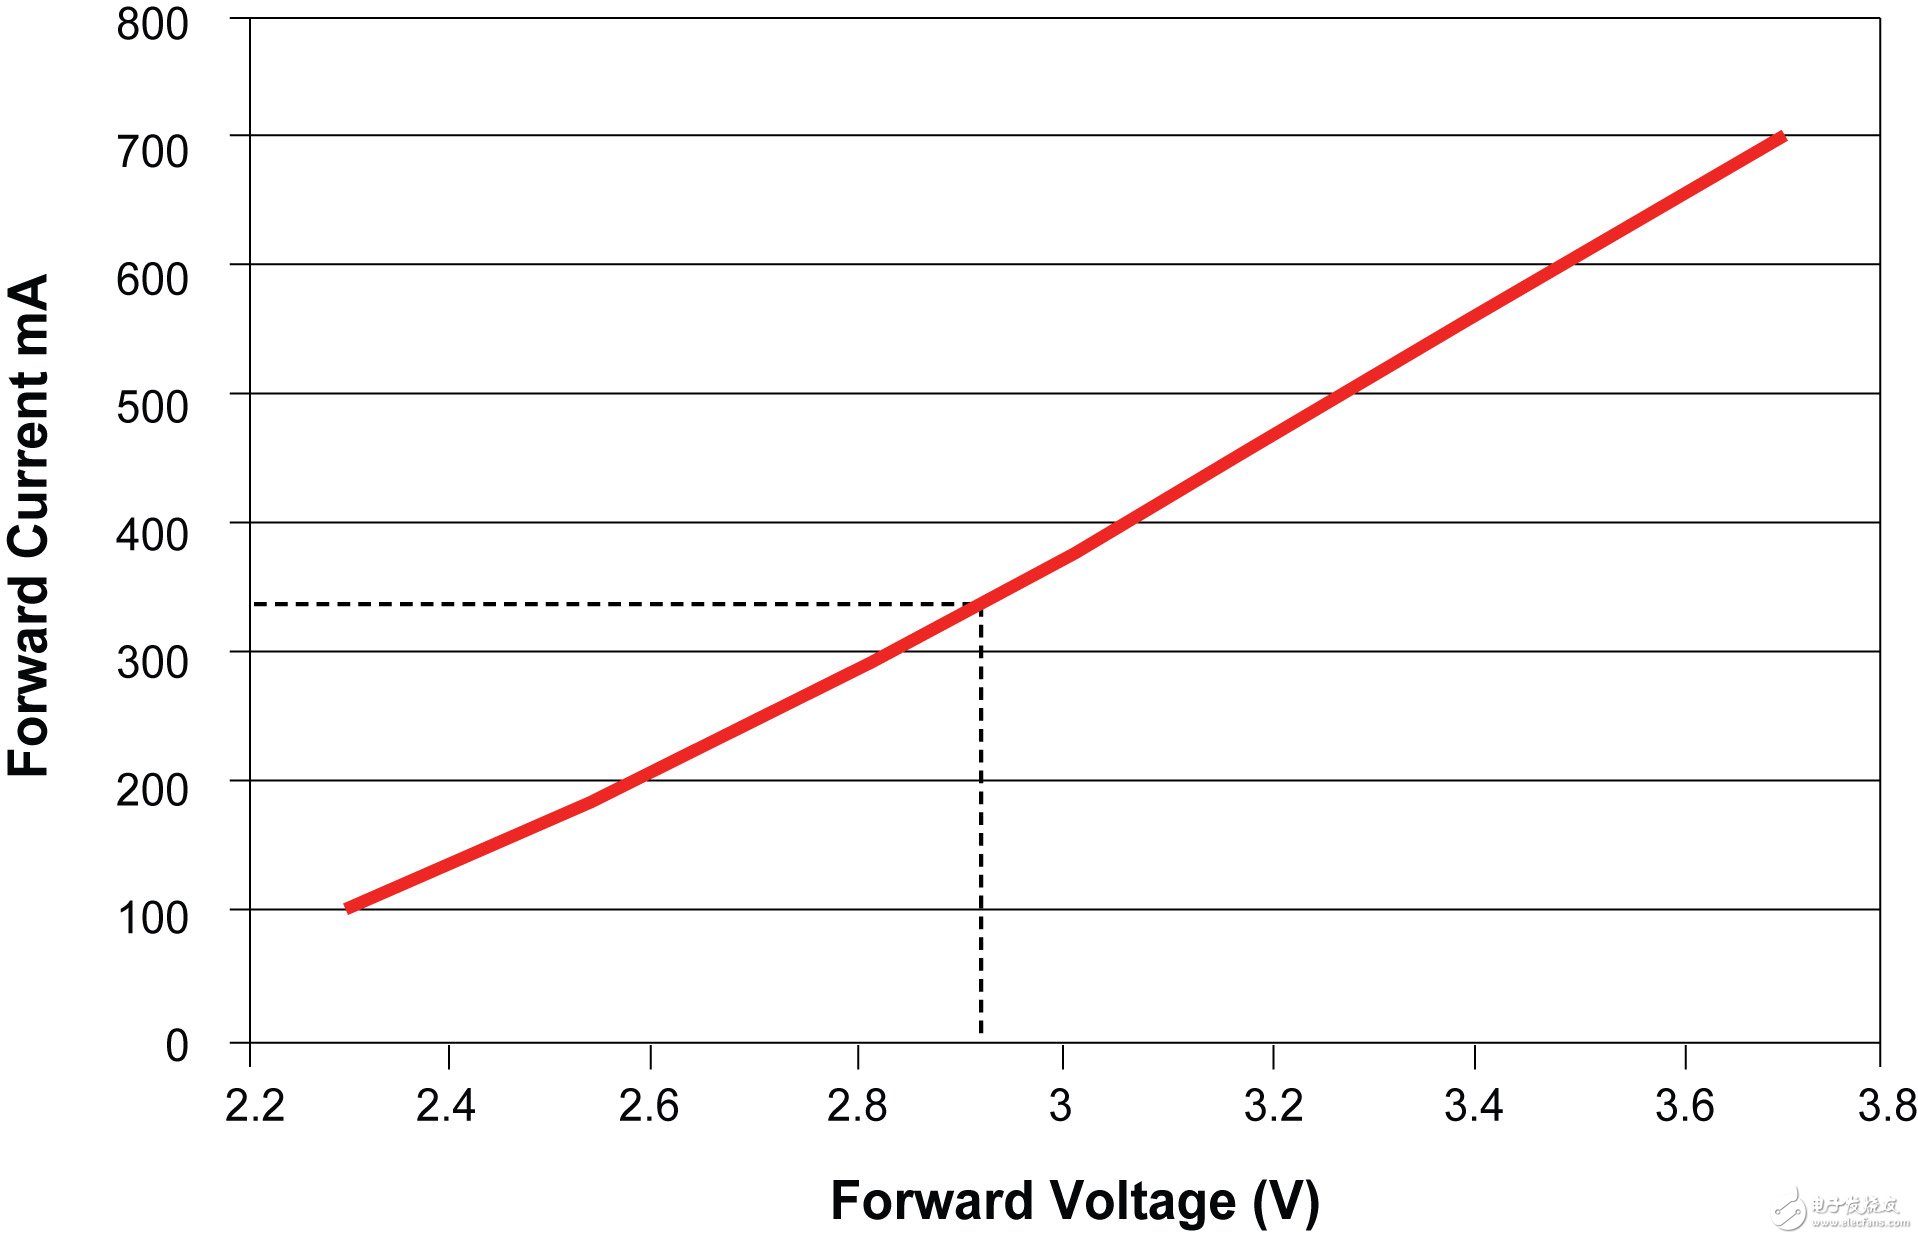 Figure 2: Effect of forward voltage change on forward current